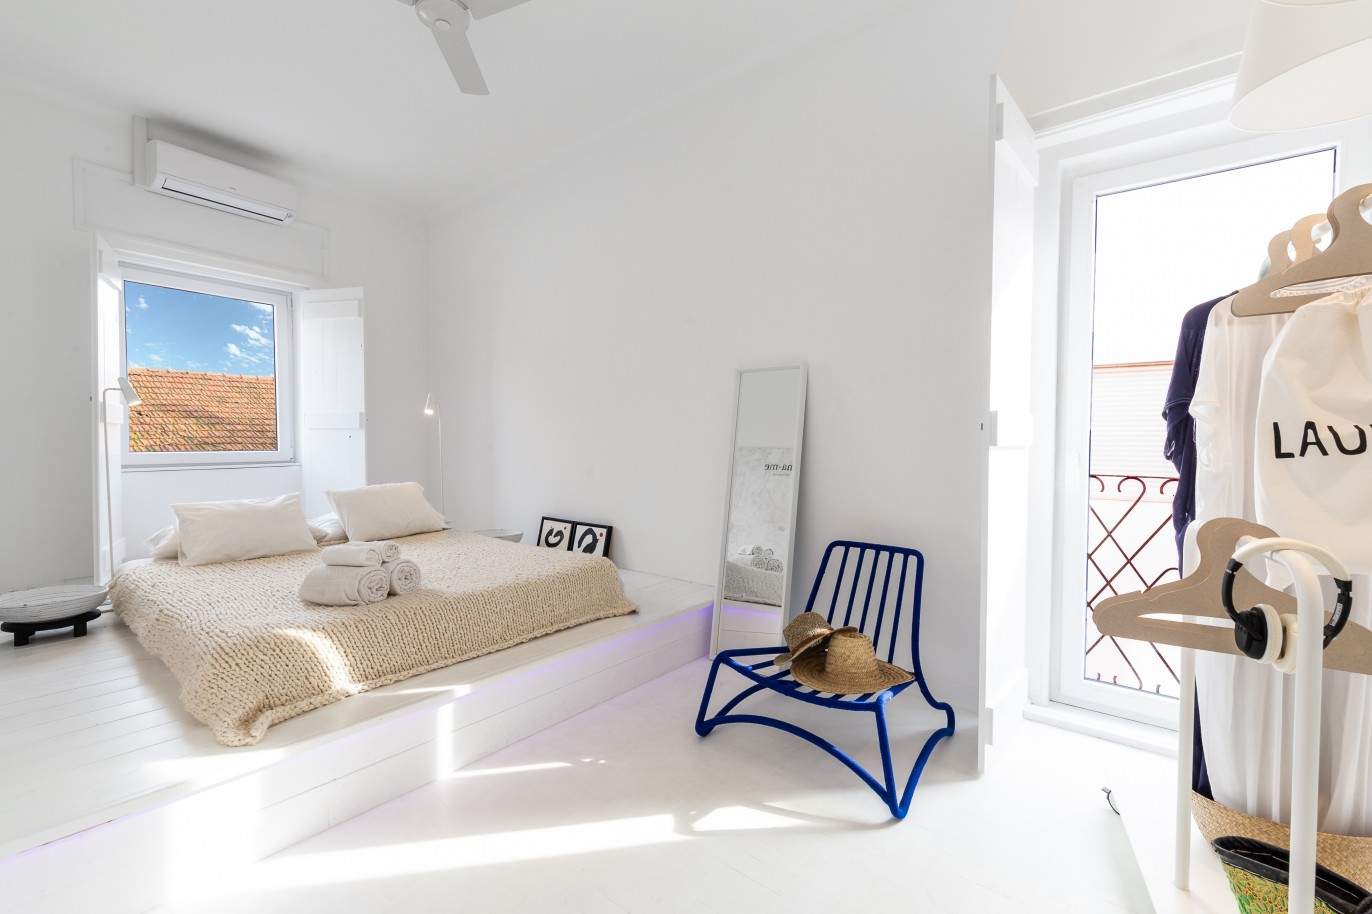 6 Bedrooms luxury villa for sale in Portimão, Algarve_208965